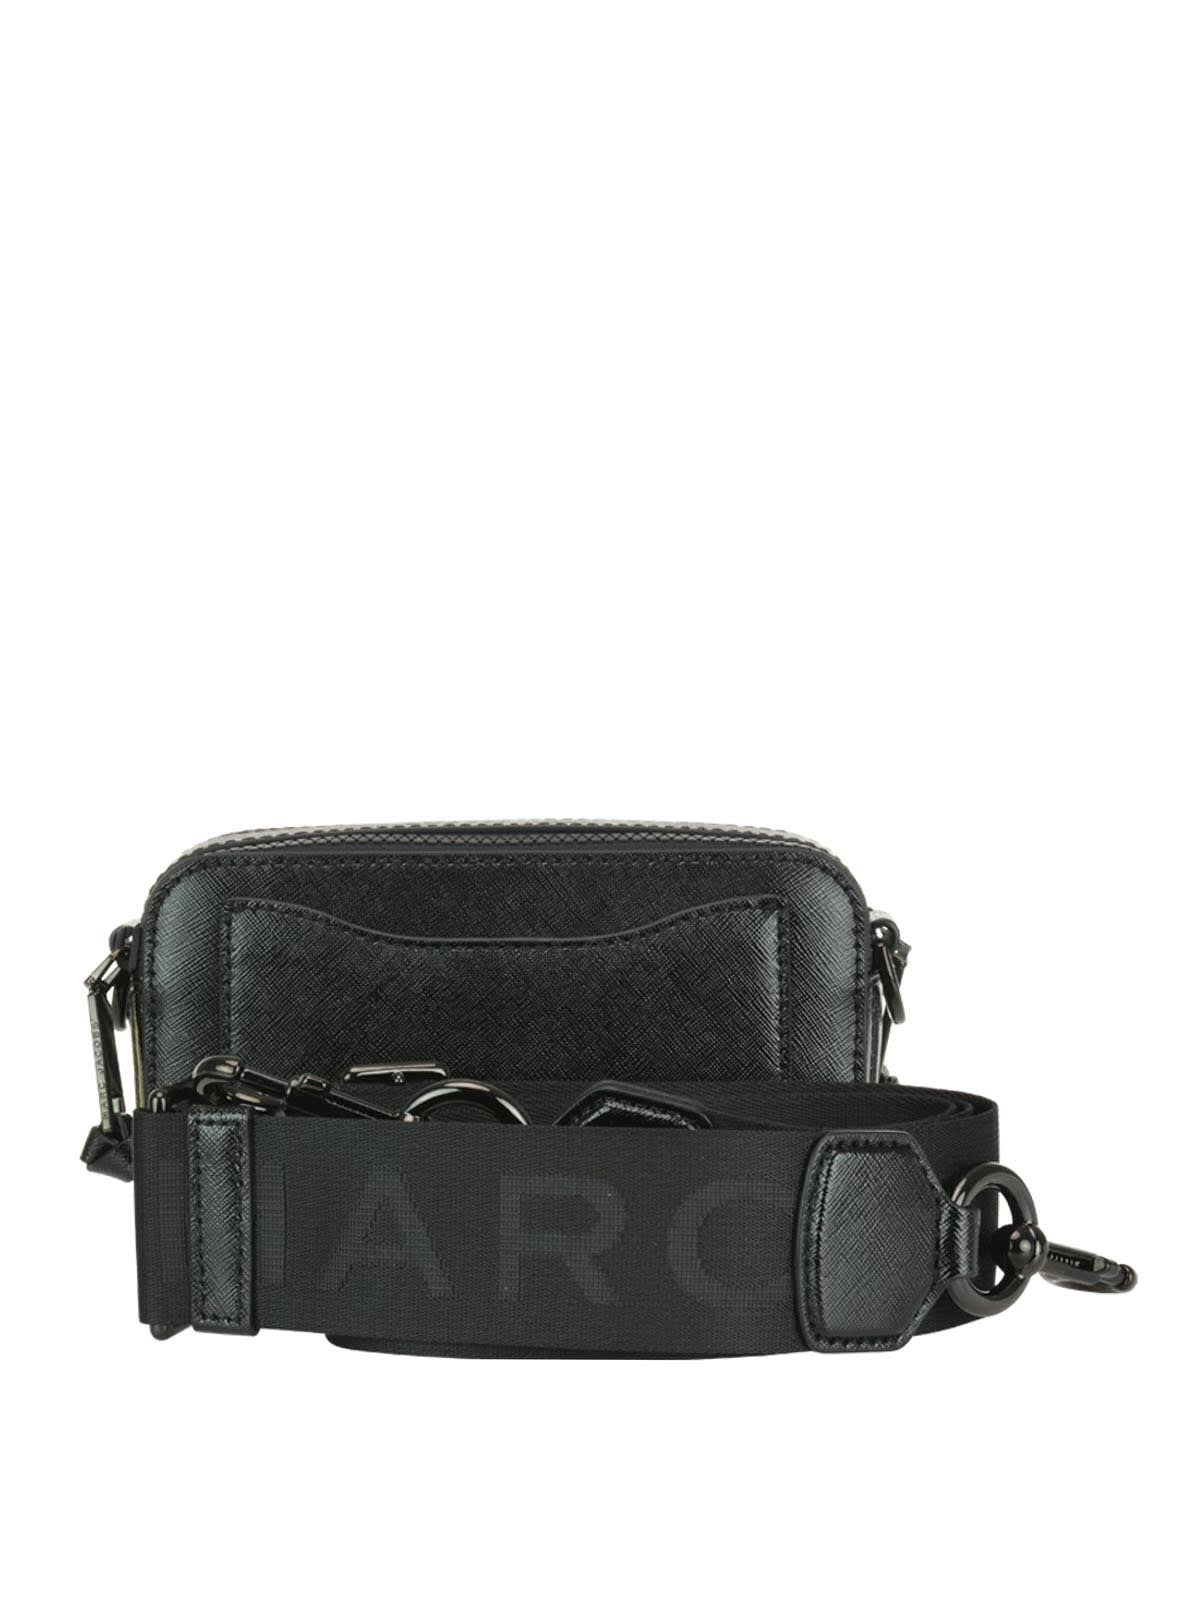 Marc Jacobs Snapshot Dtm Dark Green Leather Cross-body Bag